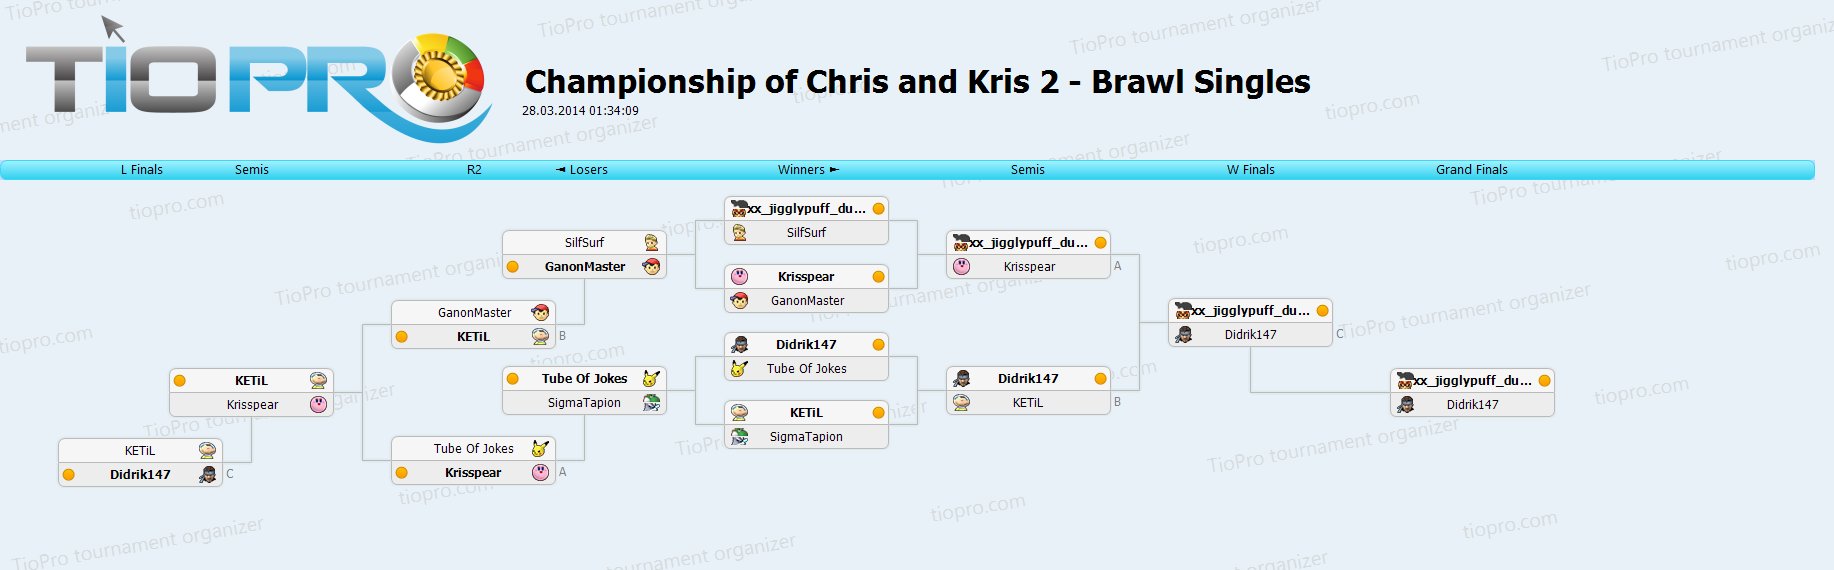 Championship of Chris and Kris (****) 2 - Brawl Singles